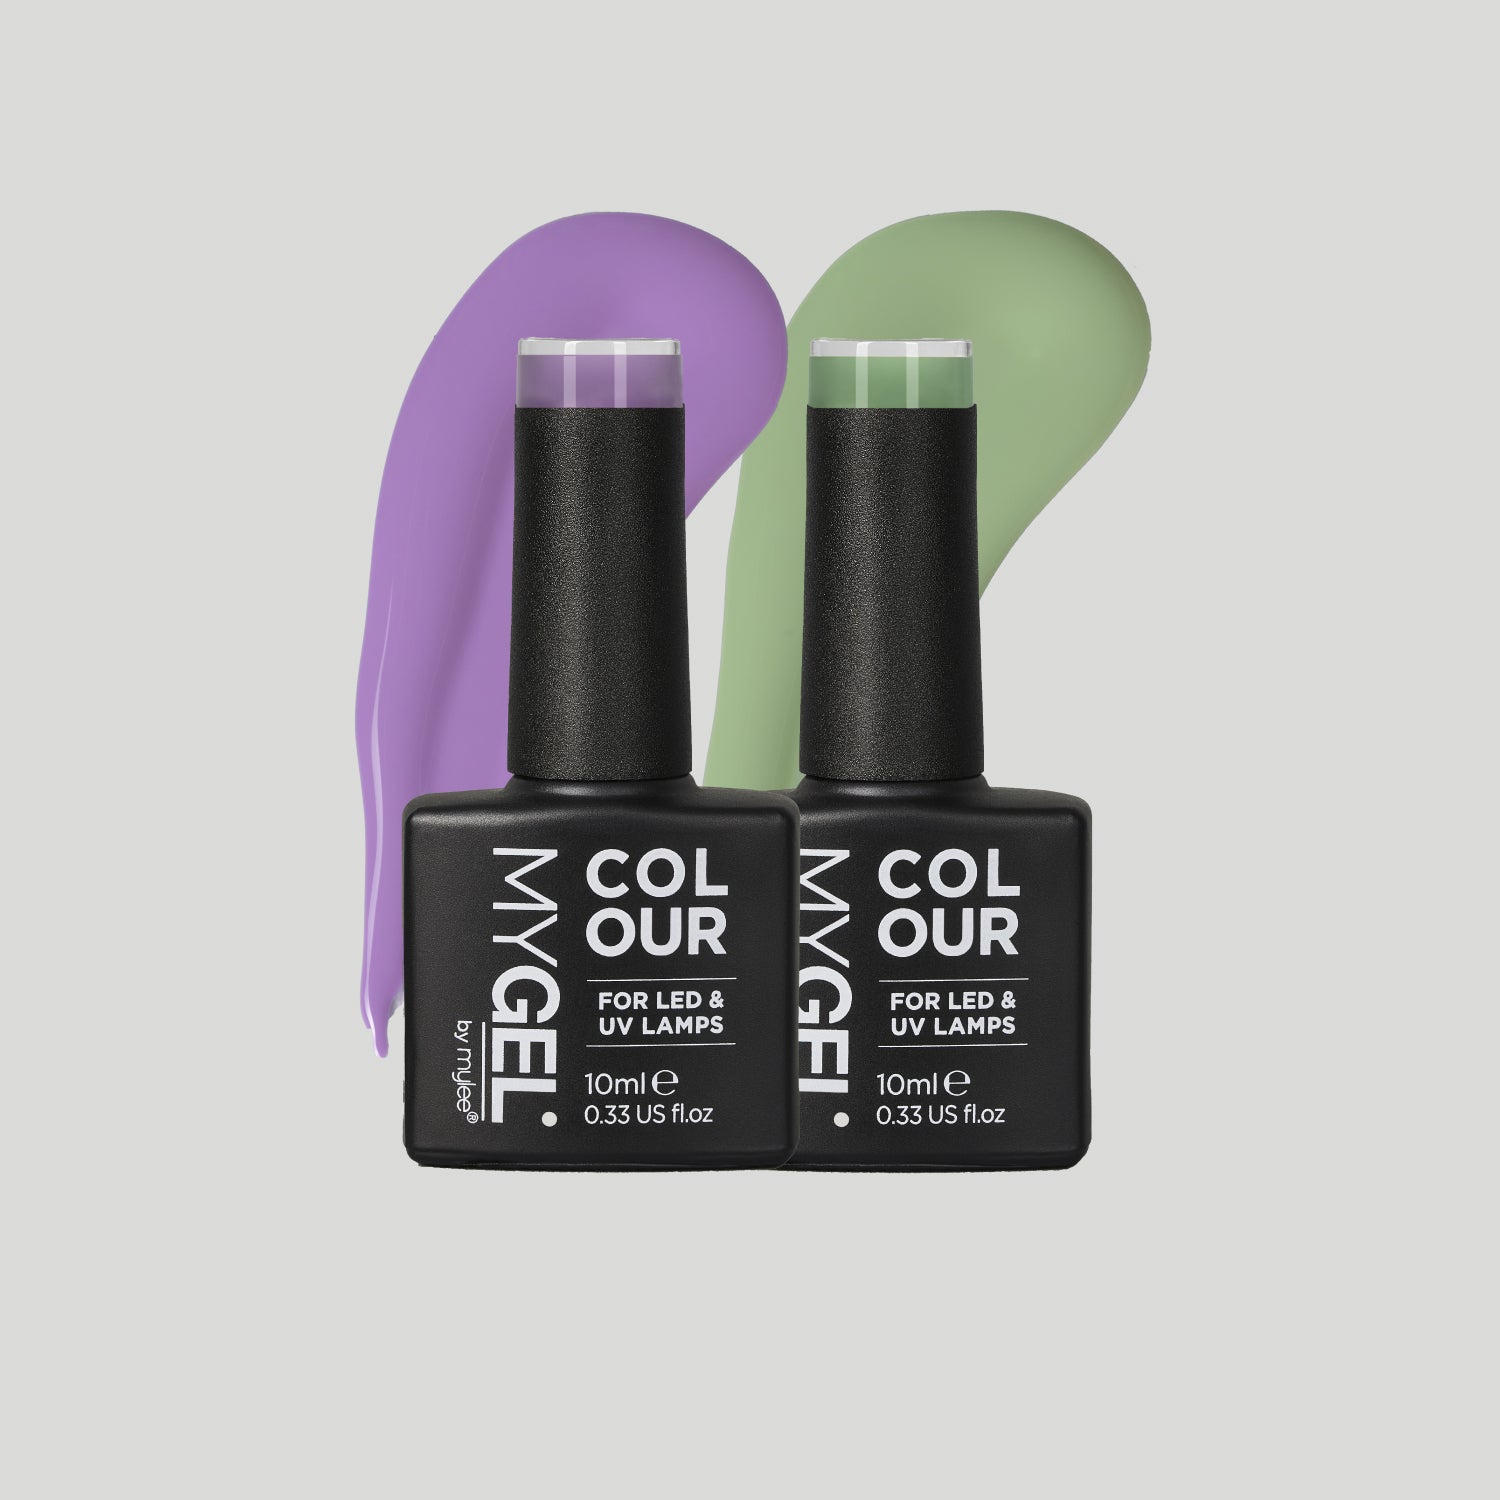 Mylee Sage Advice LED/UV Gel Nail Polish Duo - 2x10ml – Long Lasting At Home Manicure/Pedicure, High Gloss And Chip Free Wear Nail Varnish